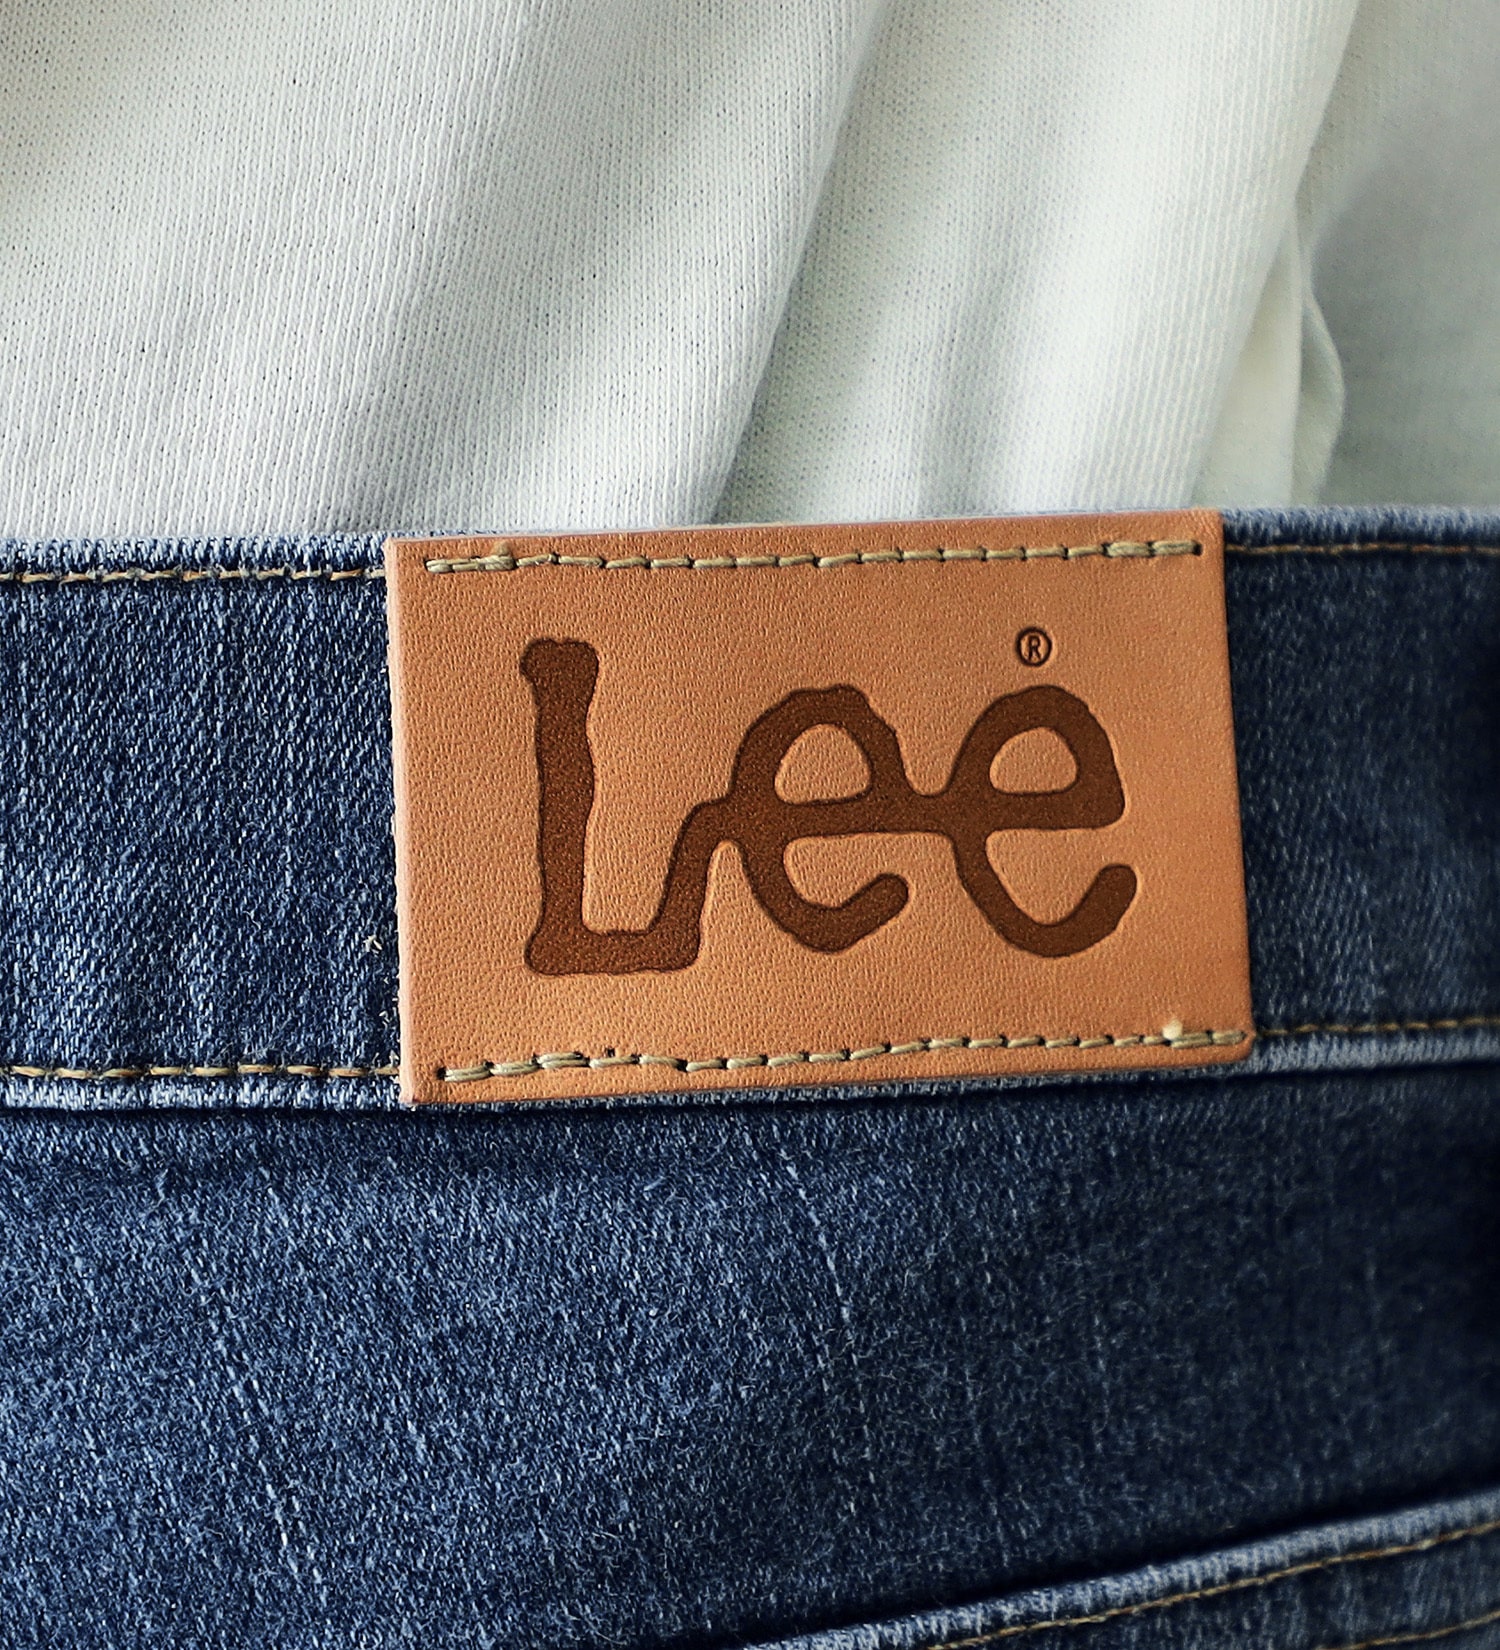 Lee(リー)の【超快適ストレッチ】すっきり細身スキニーパンツ|パンツ/デニムパンツ/メンズ|中色ブルー